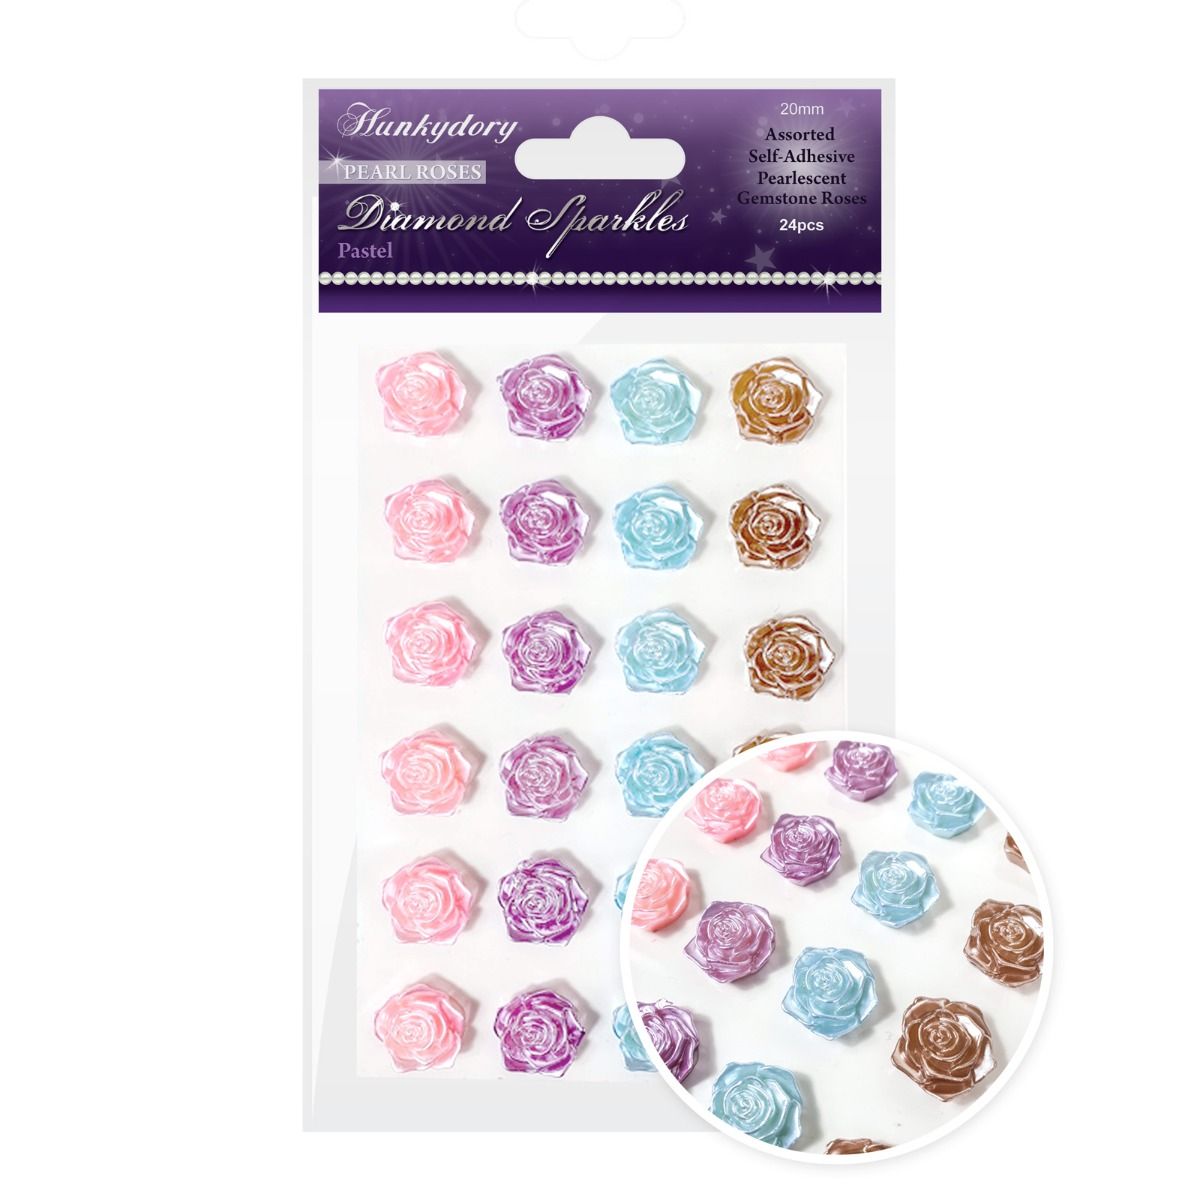 Diamond Sparkles Gemstones, Pearl Roses, Pastel (24 Pieces)